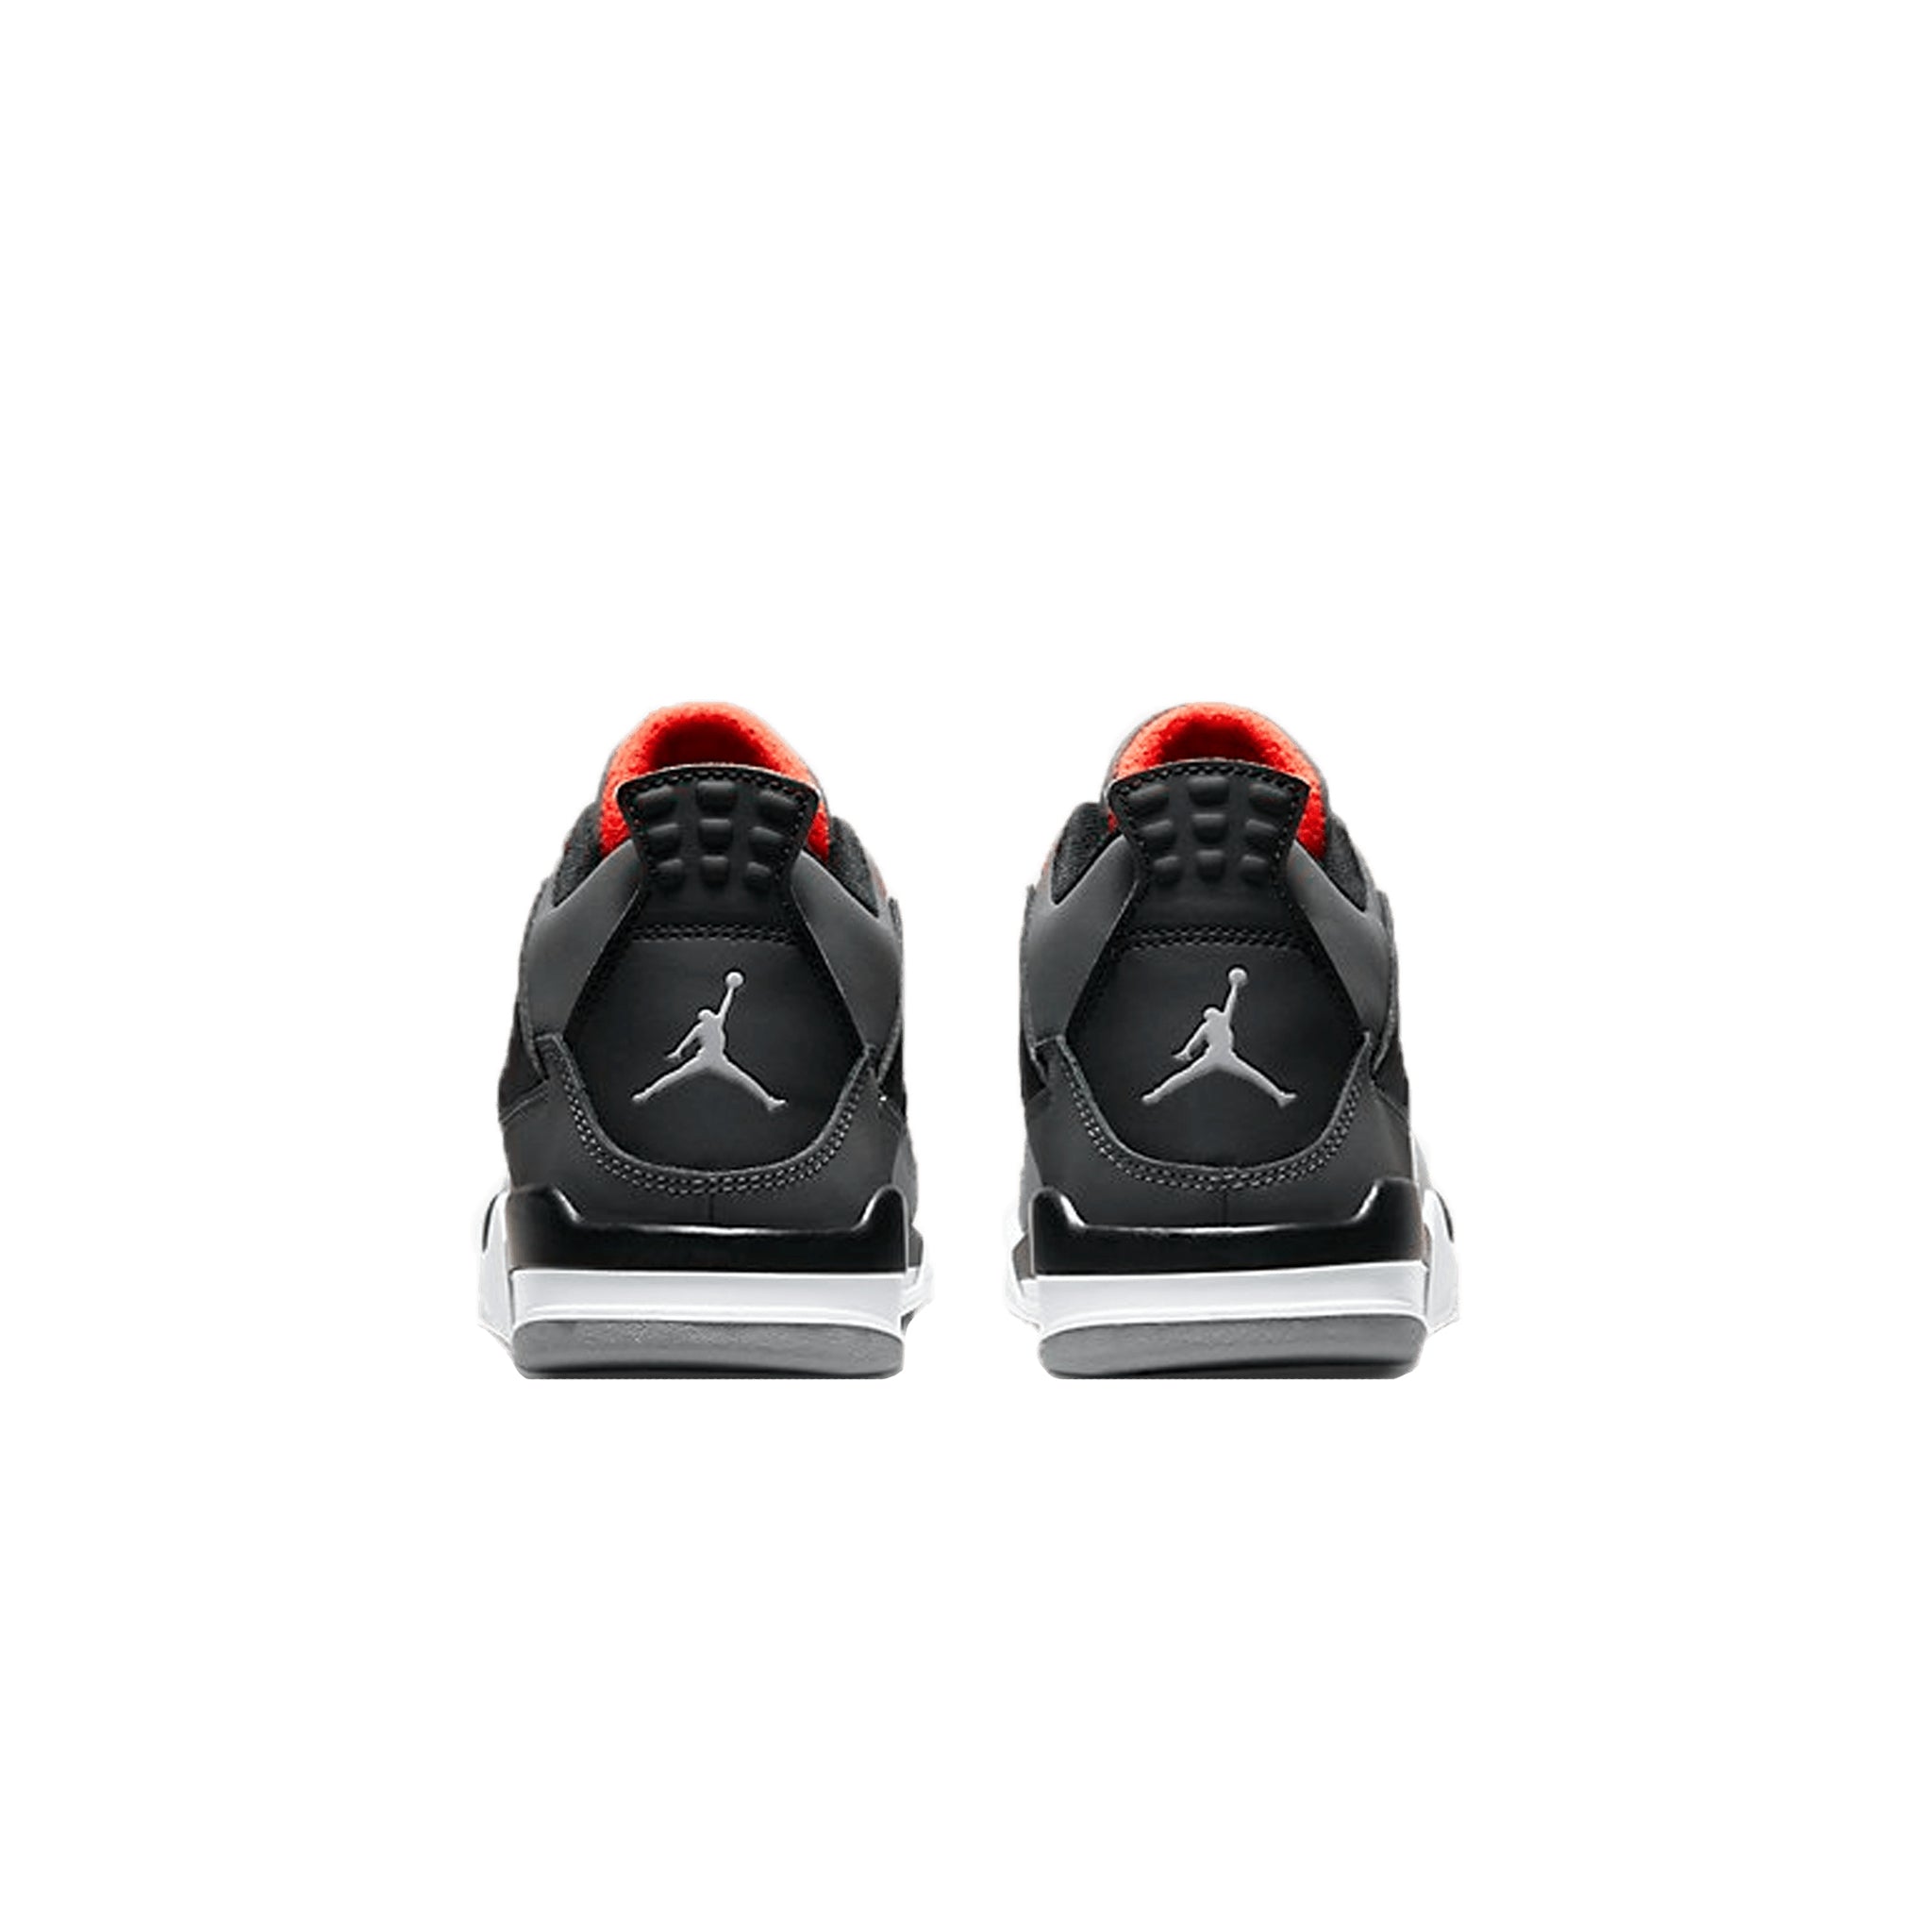 Air Jordan 4 Louis Vuitton Don For Wale by Dank Customs